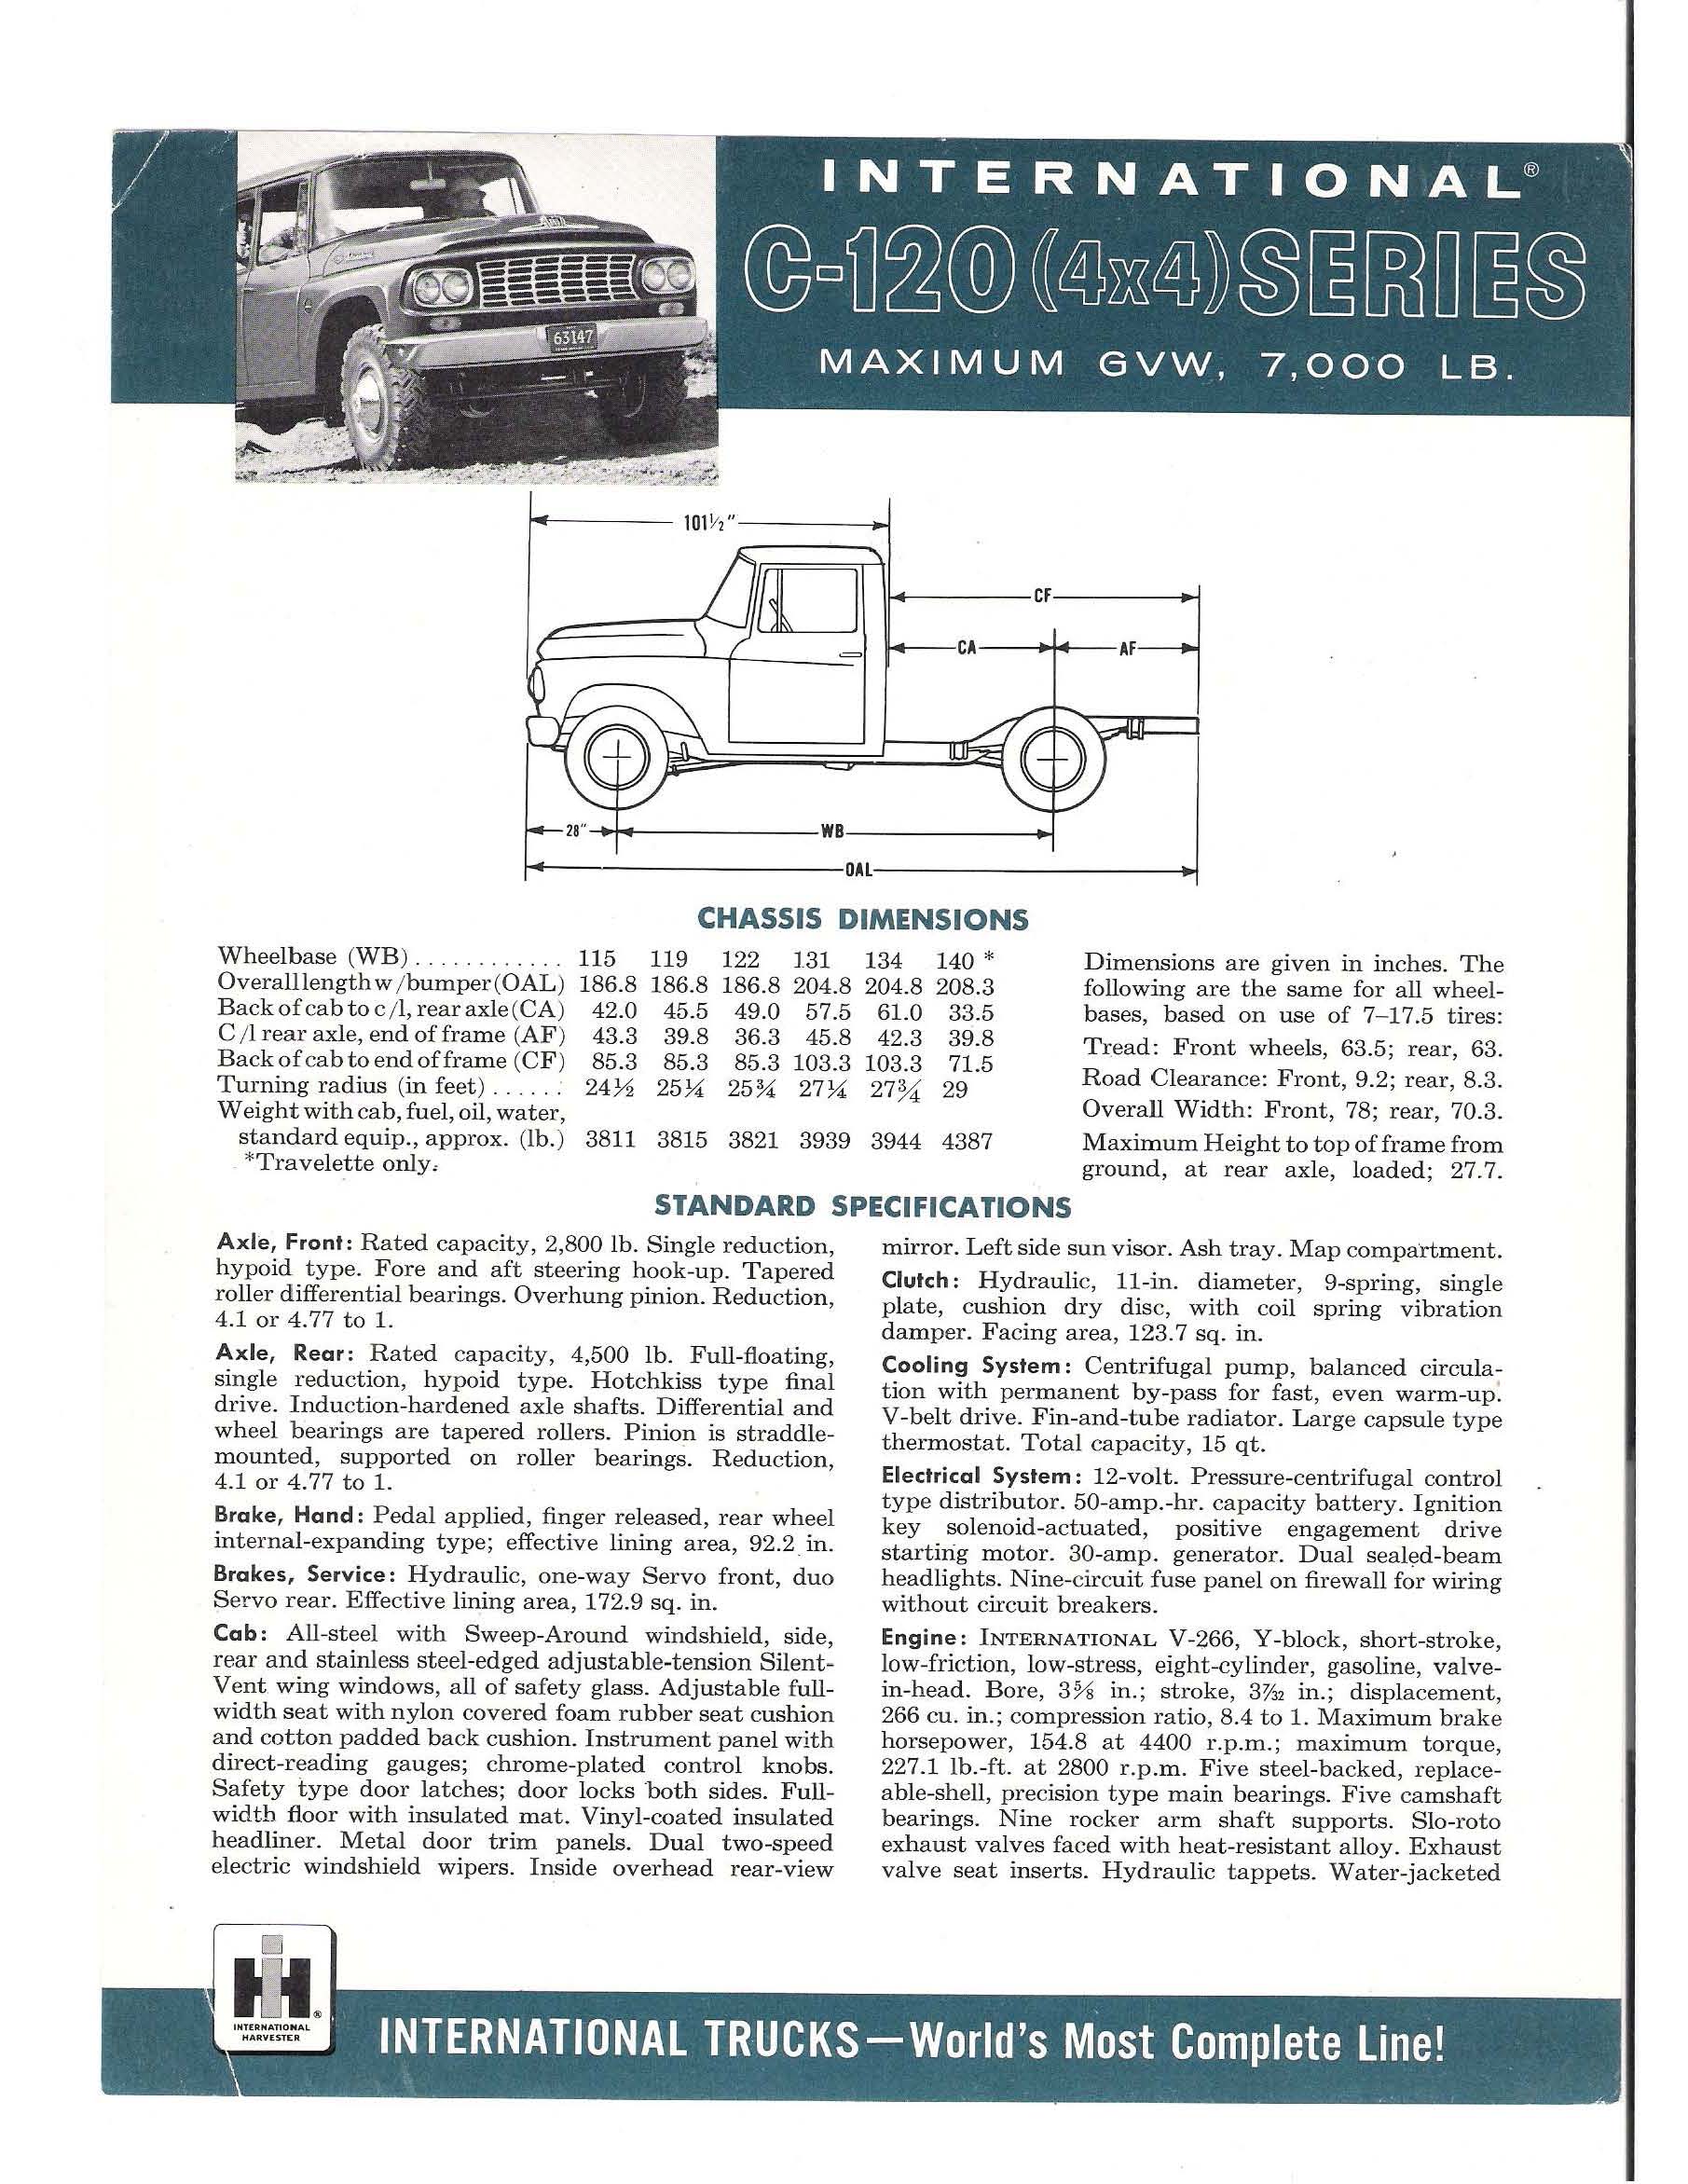 1961 International C-120 4X4 Series Folder Page 2